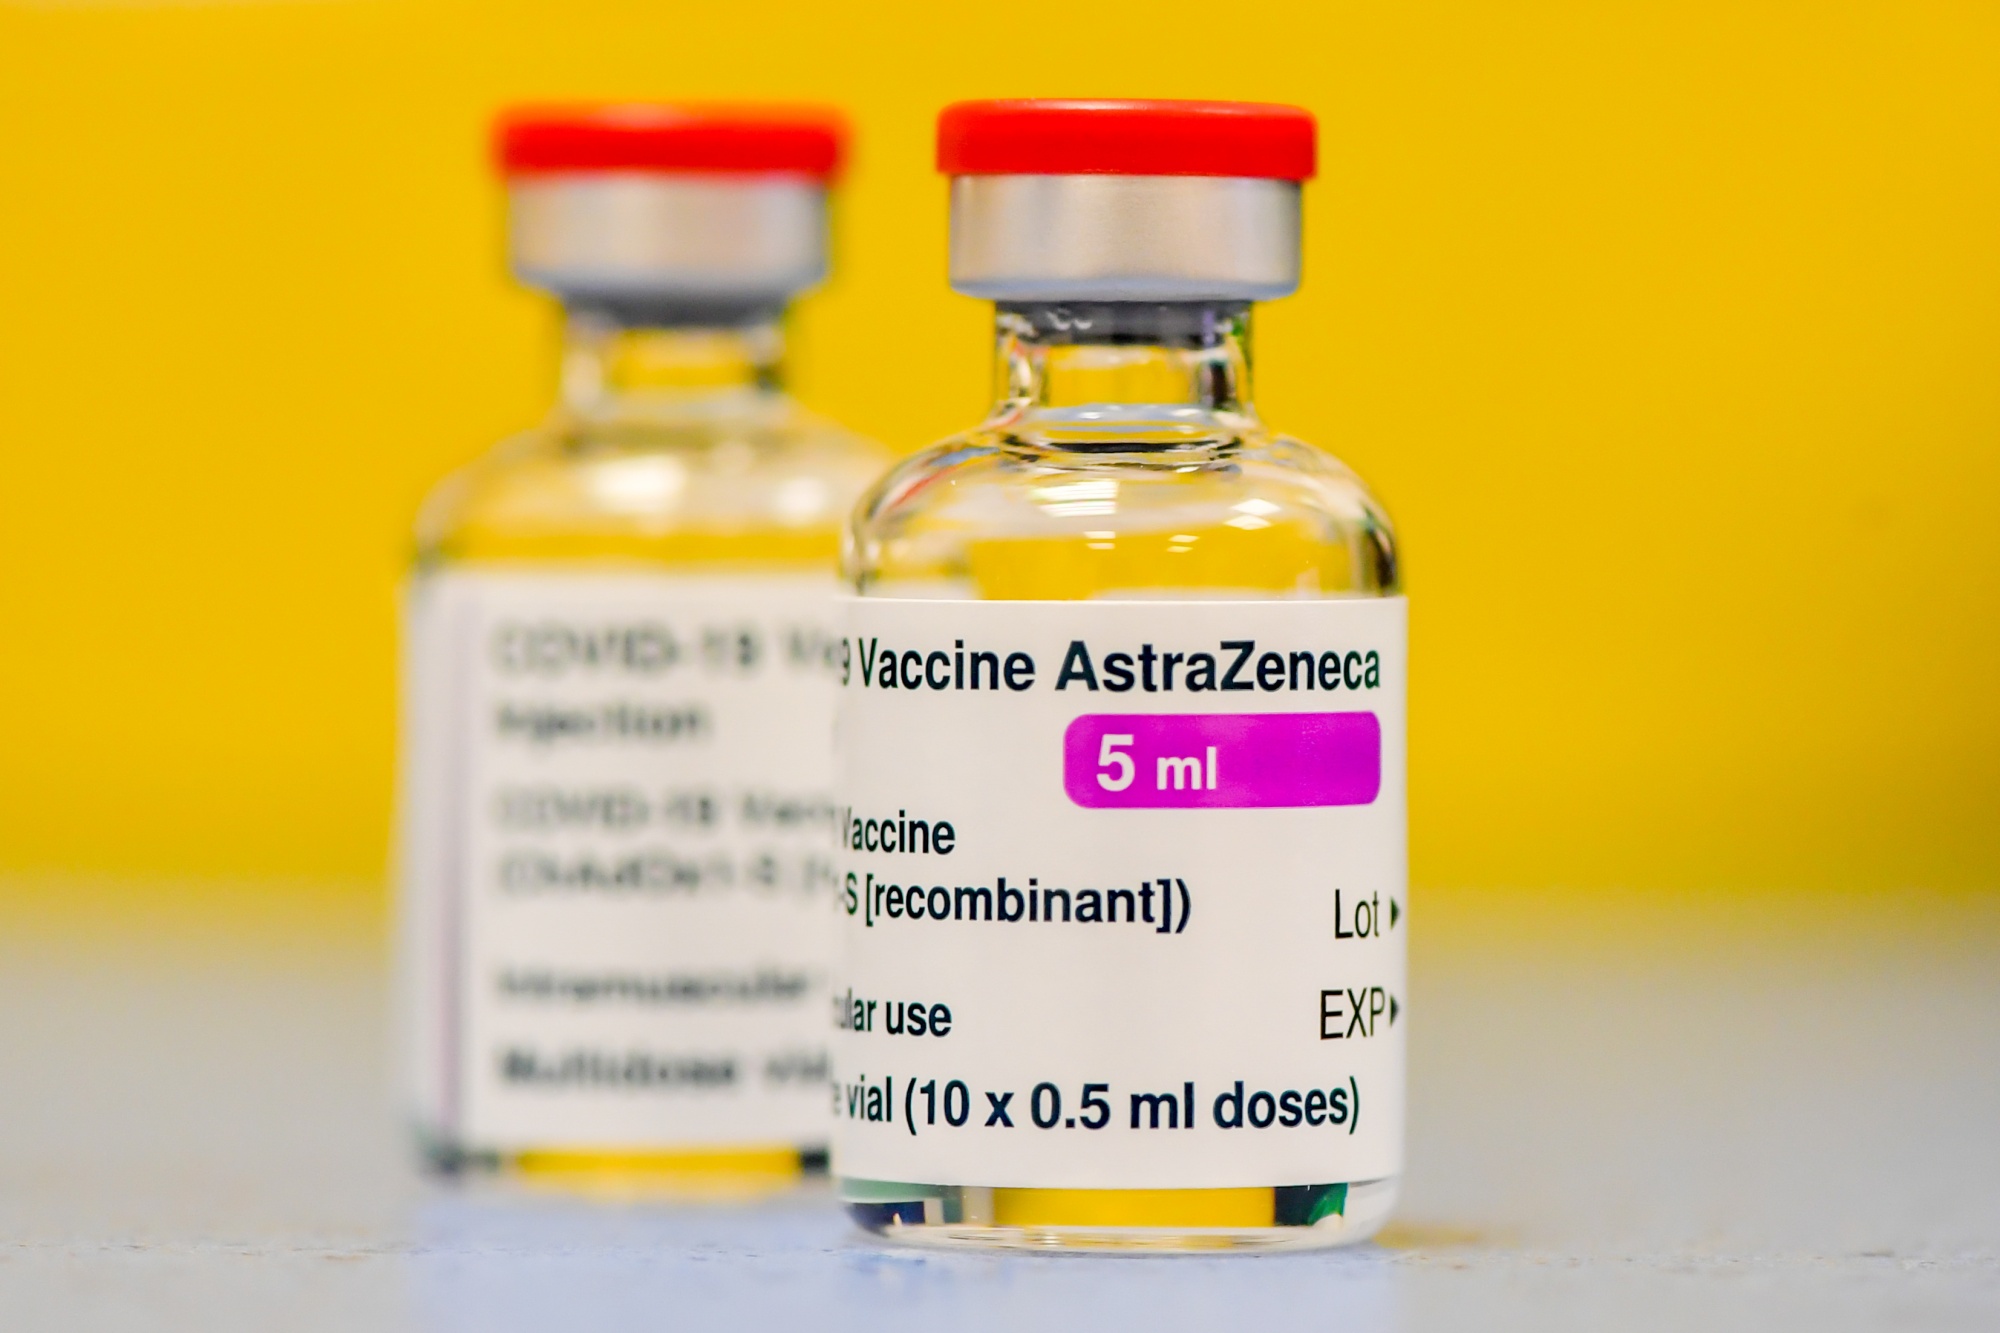 What is the AstraZeneca vaccine called in Australia?